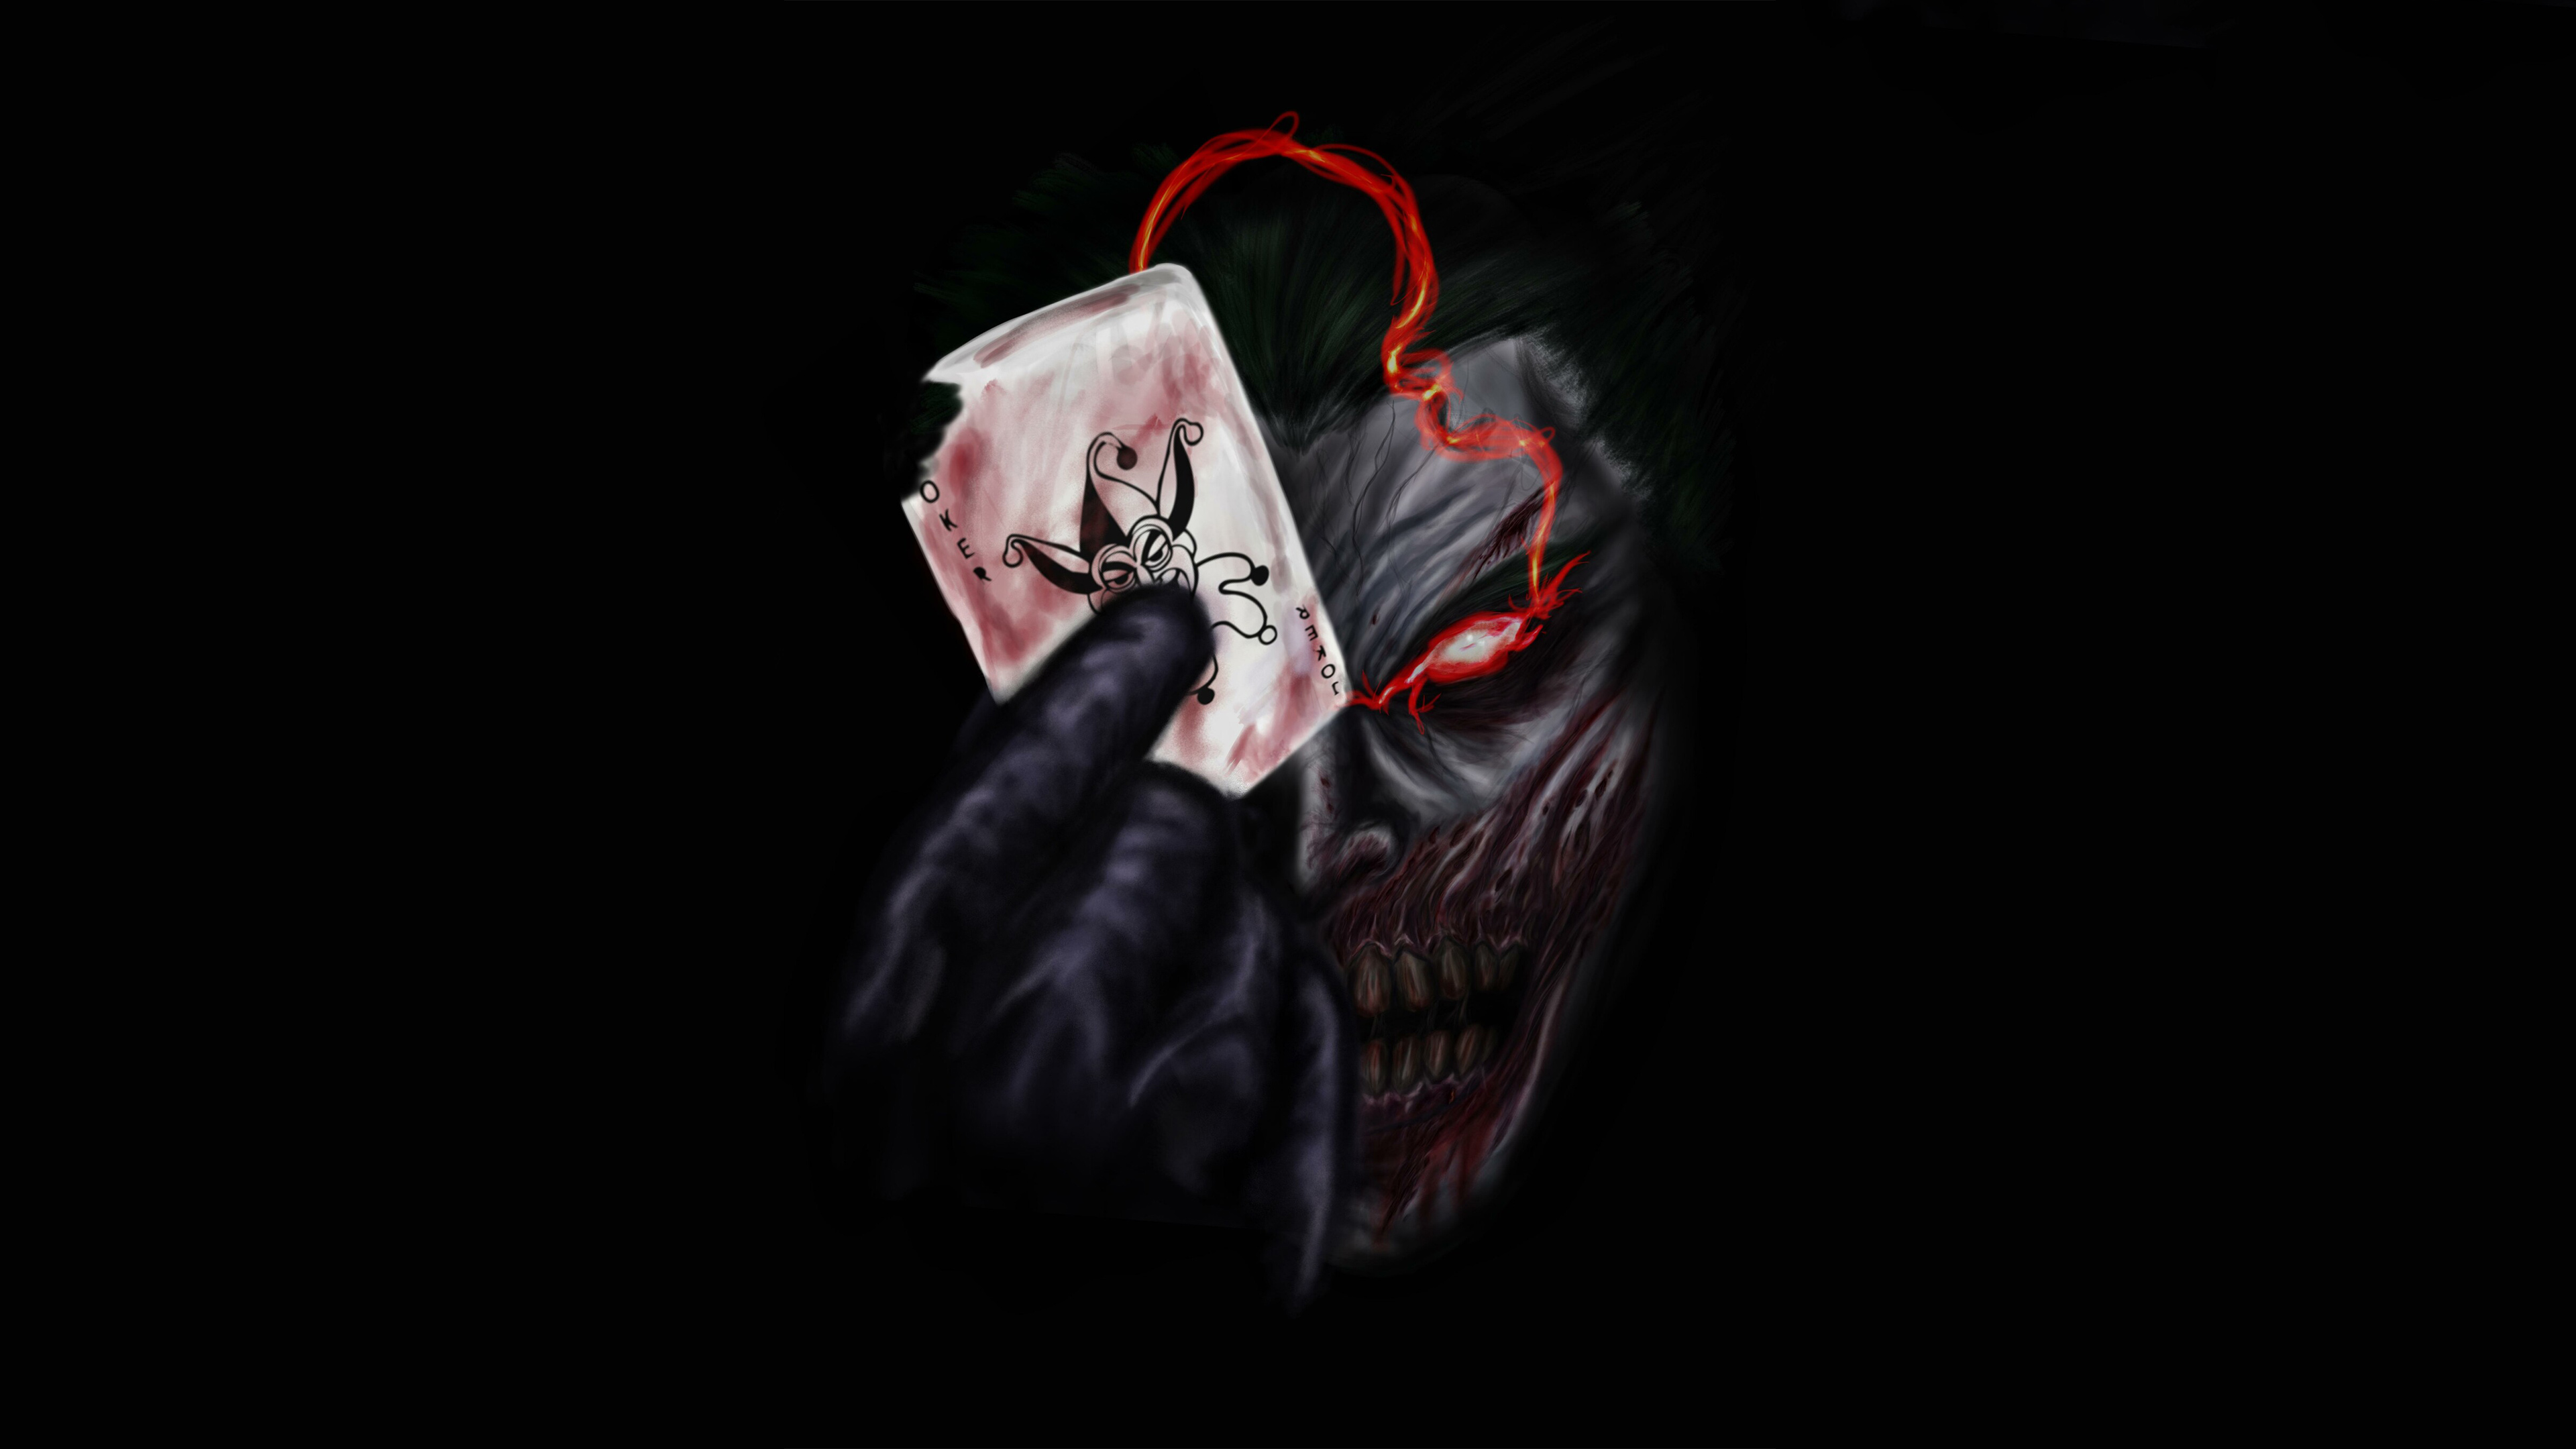 Mad Joker 4k, HD Superheroes, 4k Wallpapers, Images, Backgrounds